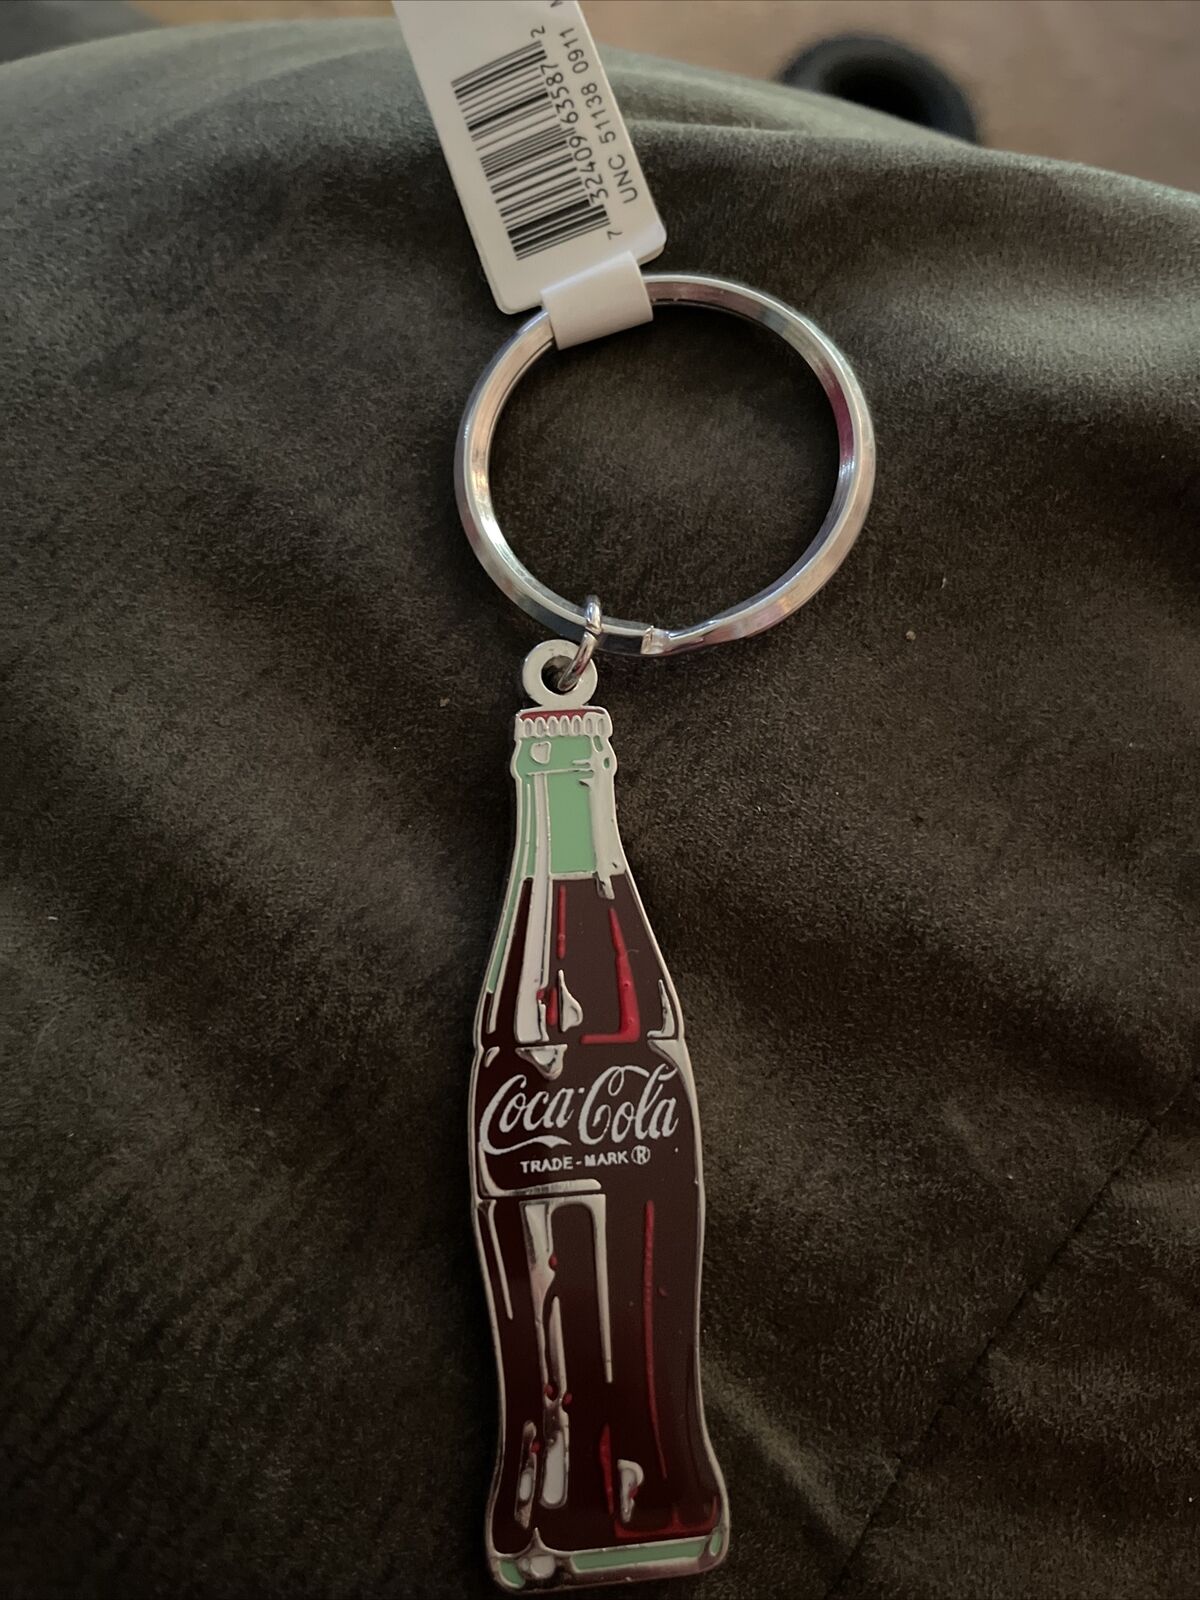 Coca Cola Bottle Shaped Key Chain 2011